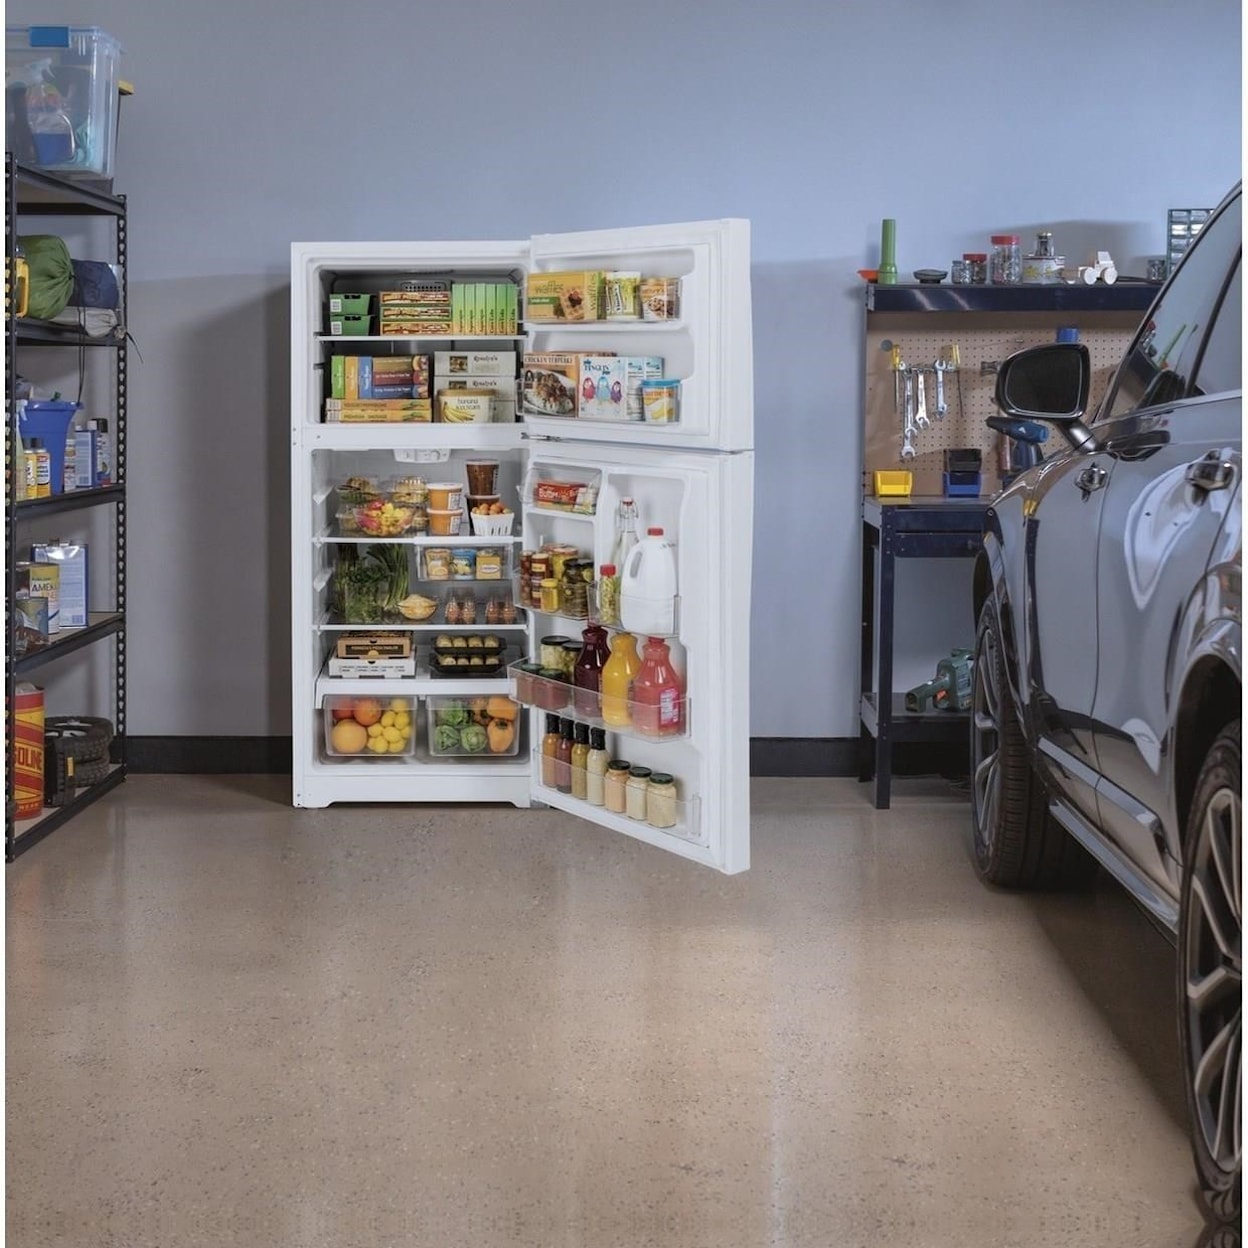 GE Appliances GE Top-Freezer Refrigerators GE® 21.9 Cu. Ft. Top-Freezer Refrigerator